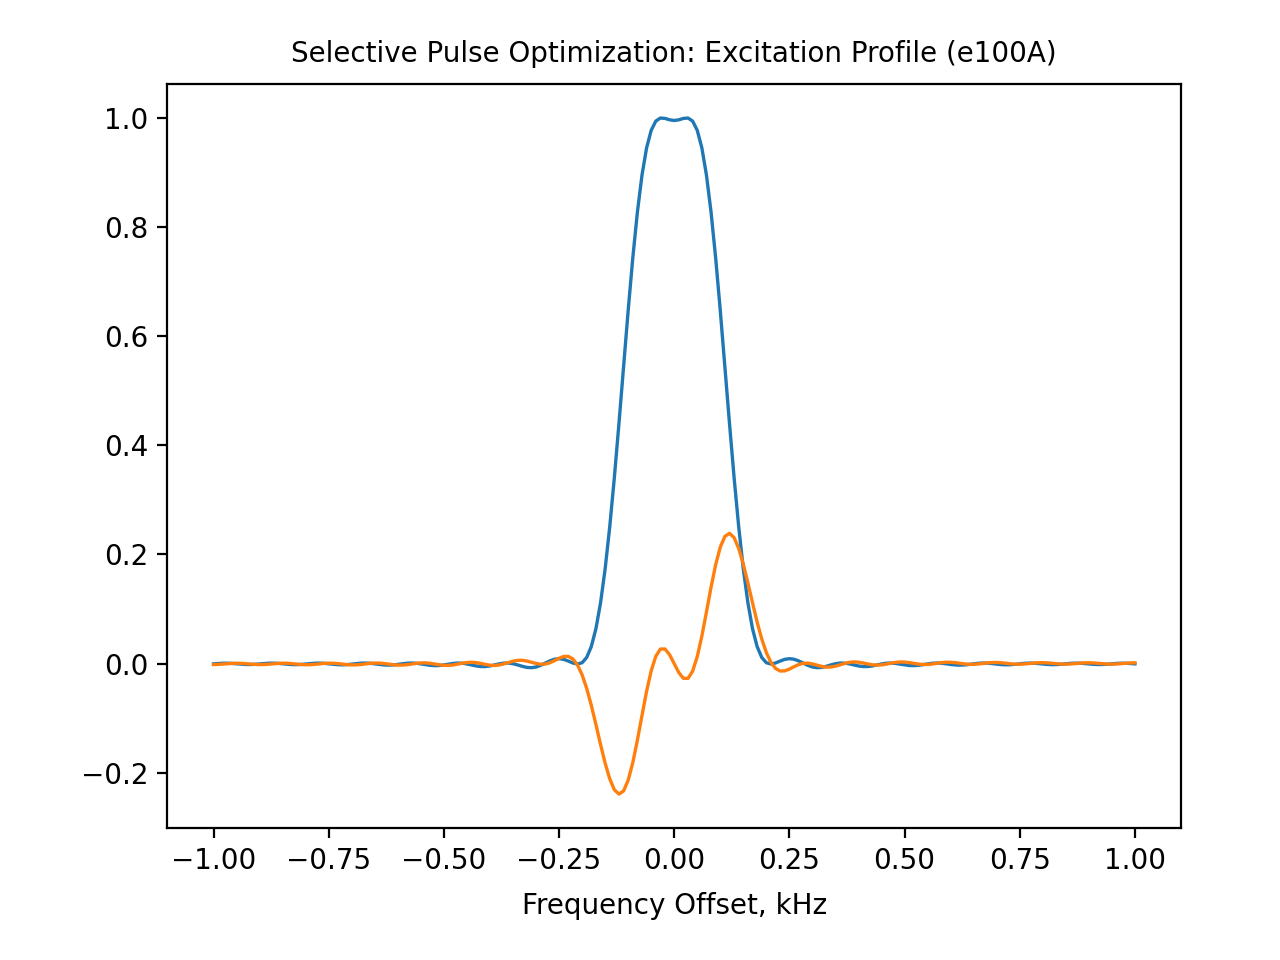 e100A Excitation Profile